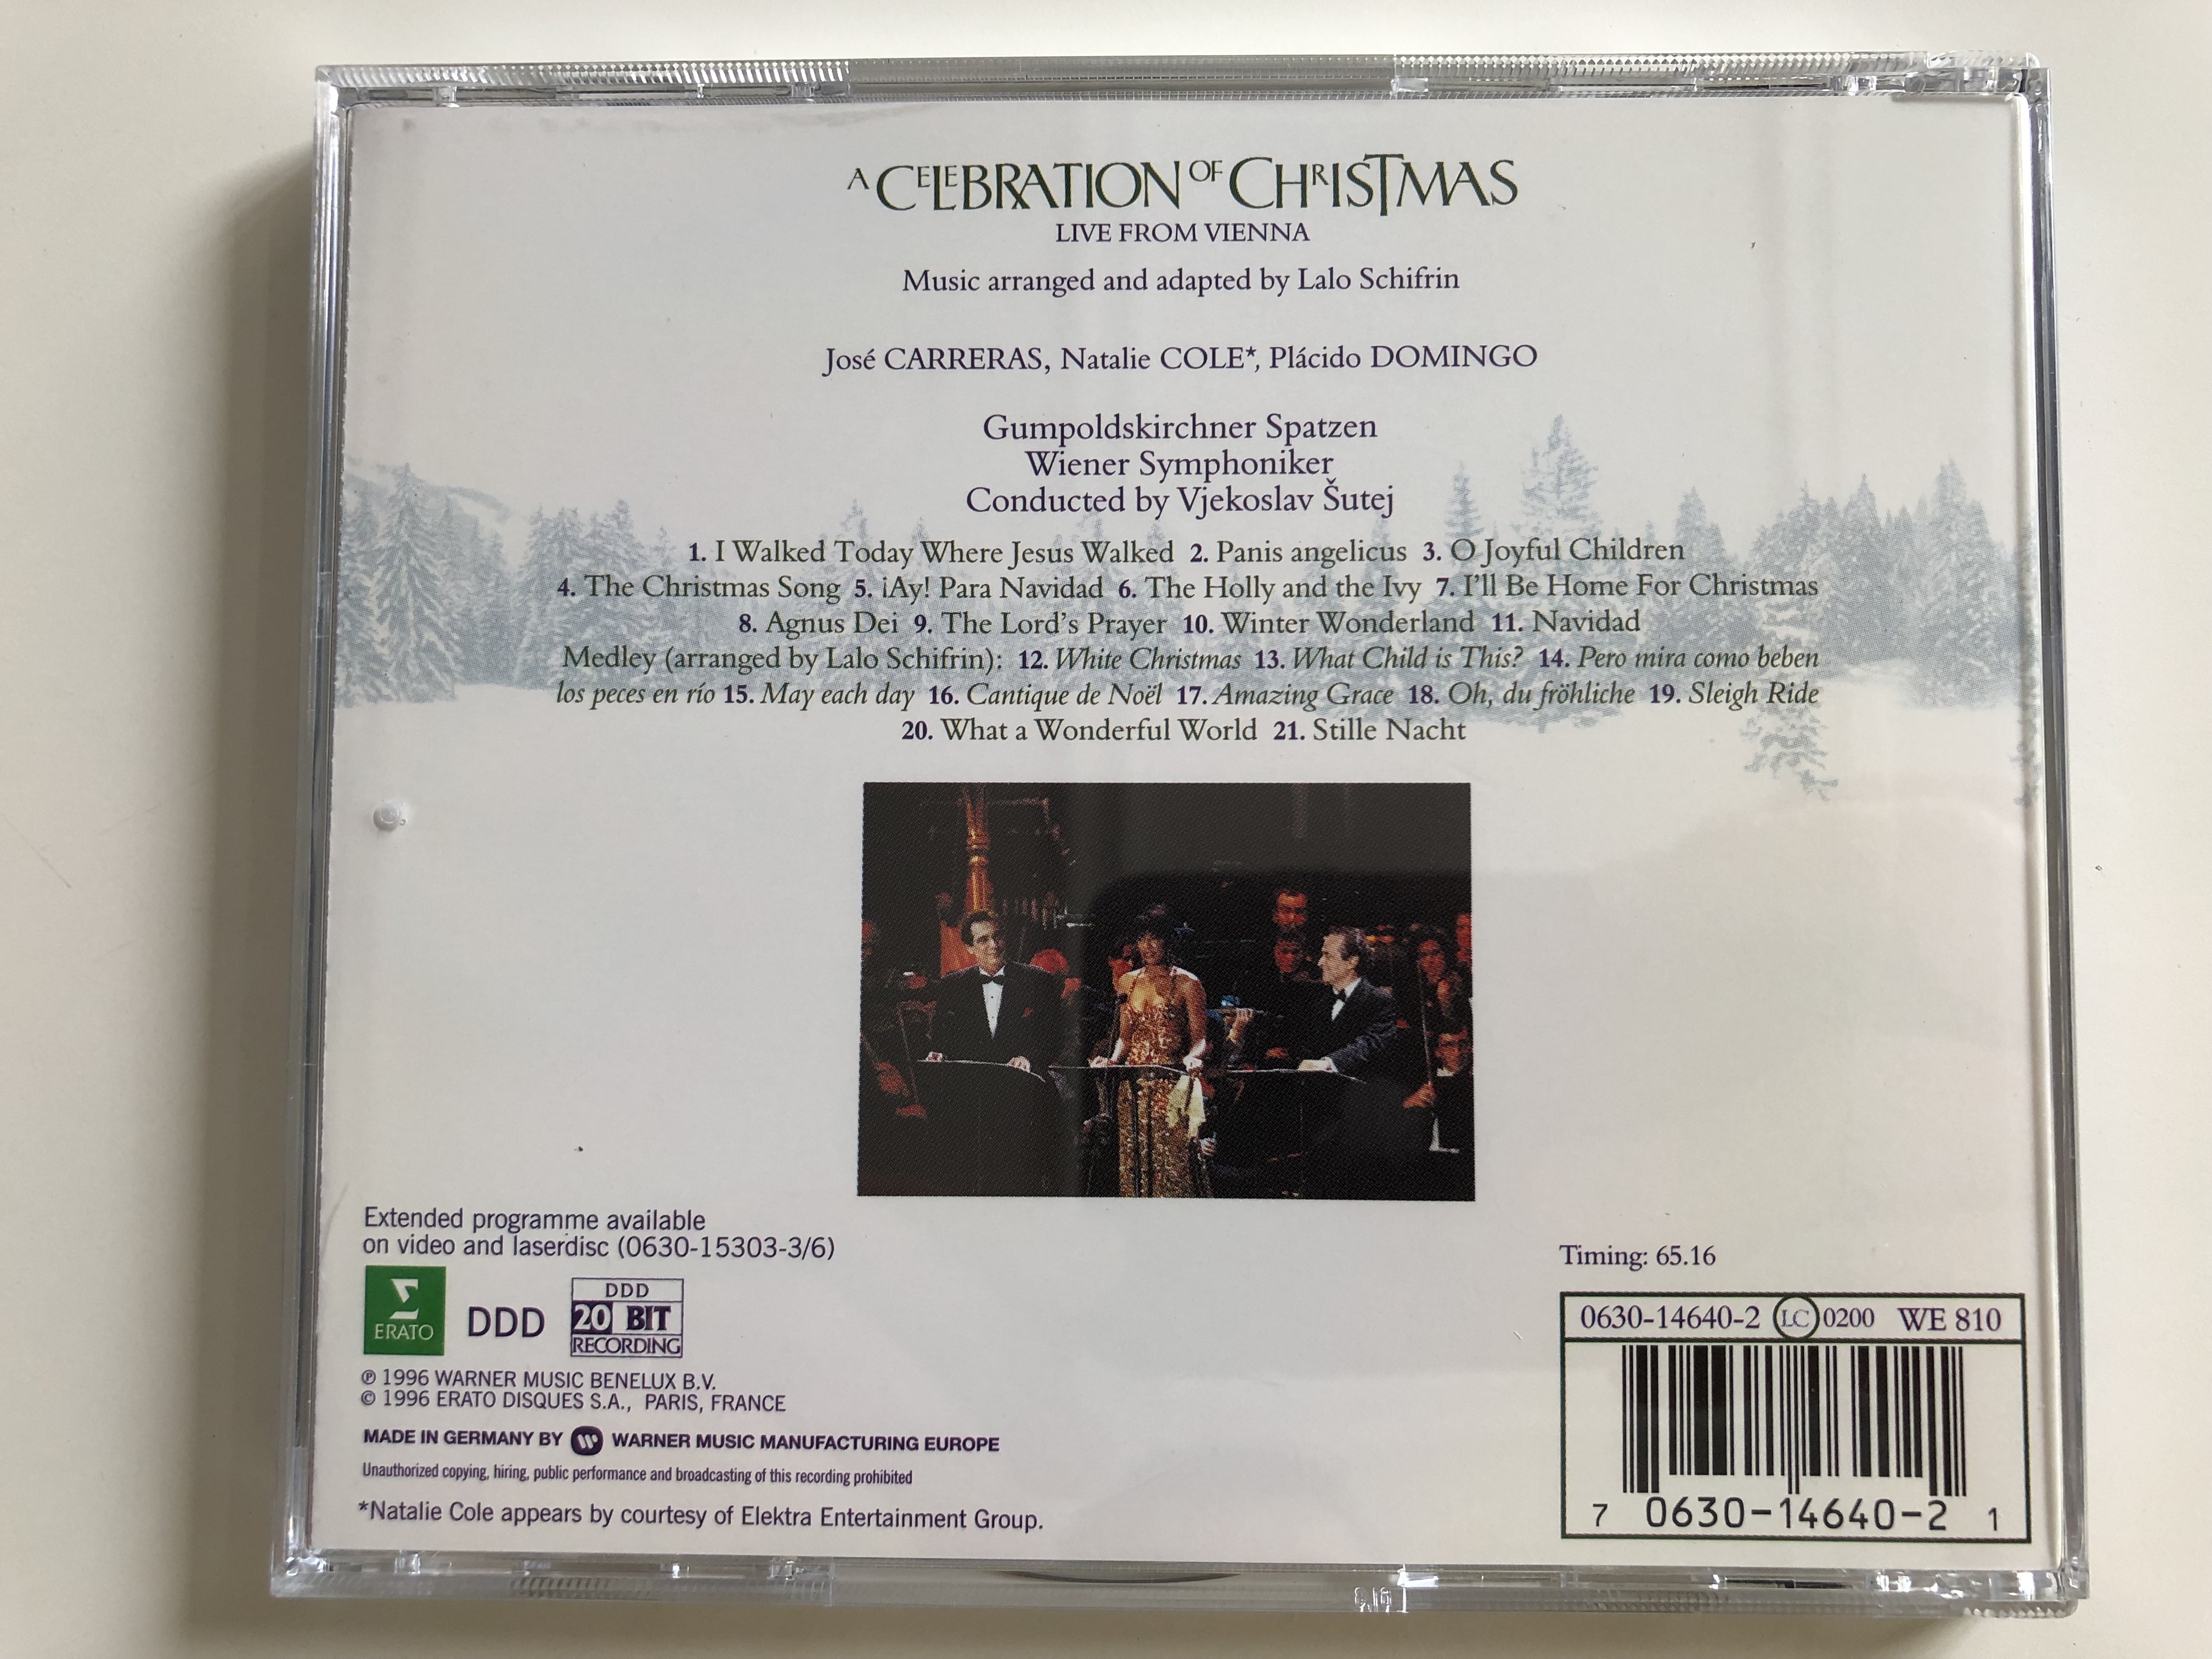 a-celebration-of-christmas-live-from-vienna-jos-carreras-natalie-cole-pl-cido-domingo-audio-cd-1996-erato-warner-7-.jpg